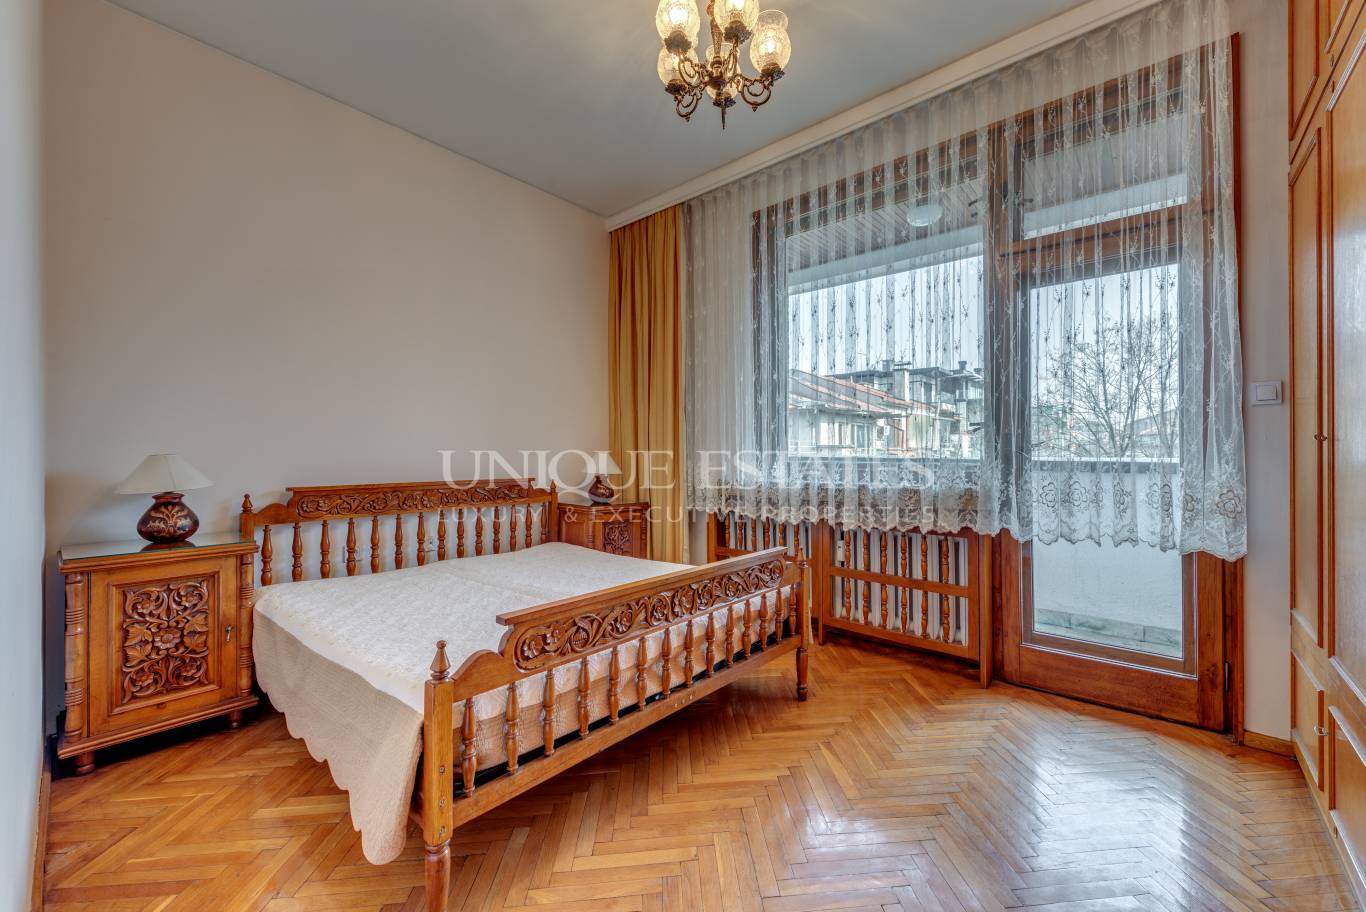 Апартамент под наем в София, Лозенец - код на имота: K13772 - image 12